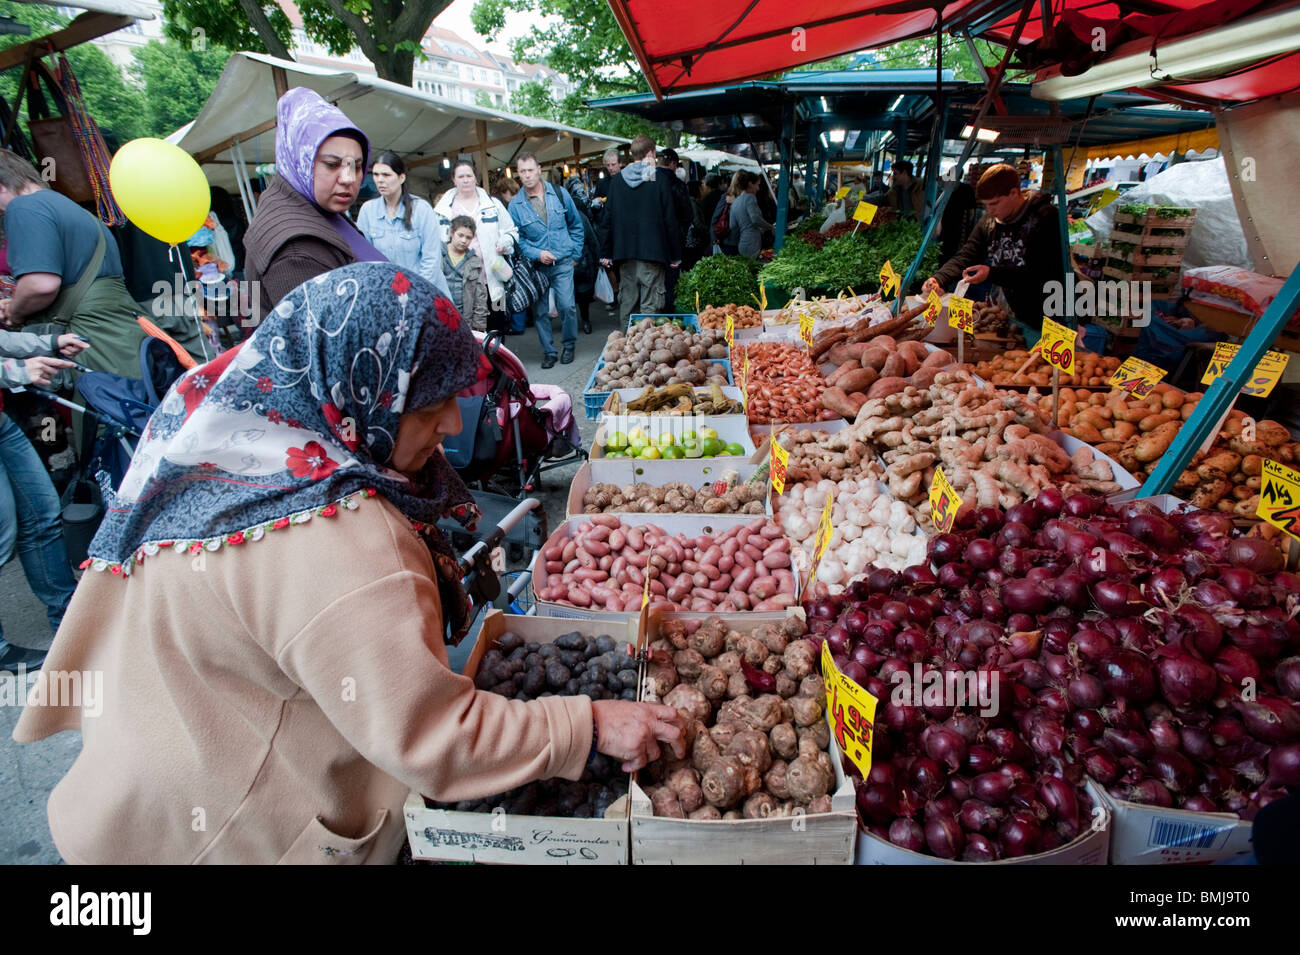 Turkish market on Maybachufer in Kreuzberg district of Berlin Germany Stock Photo